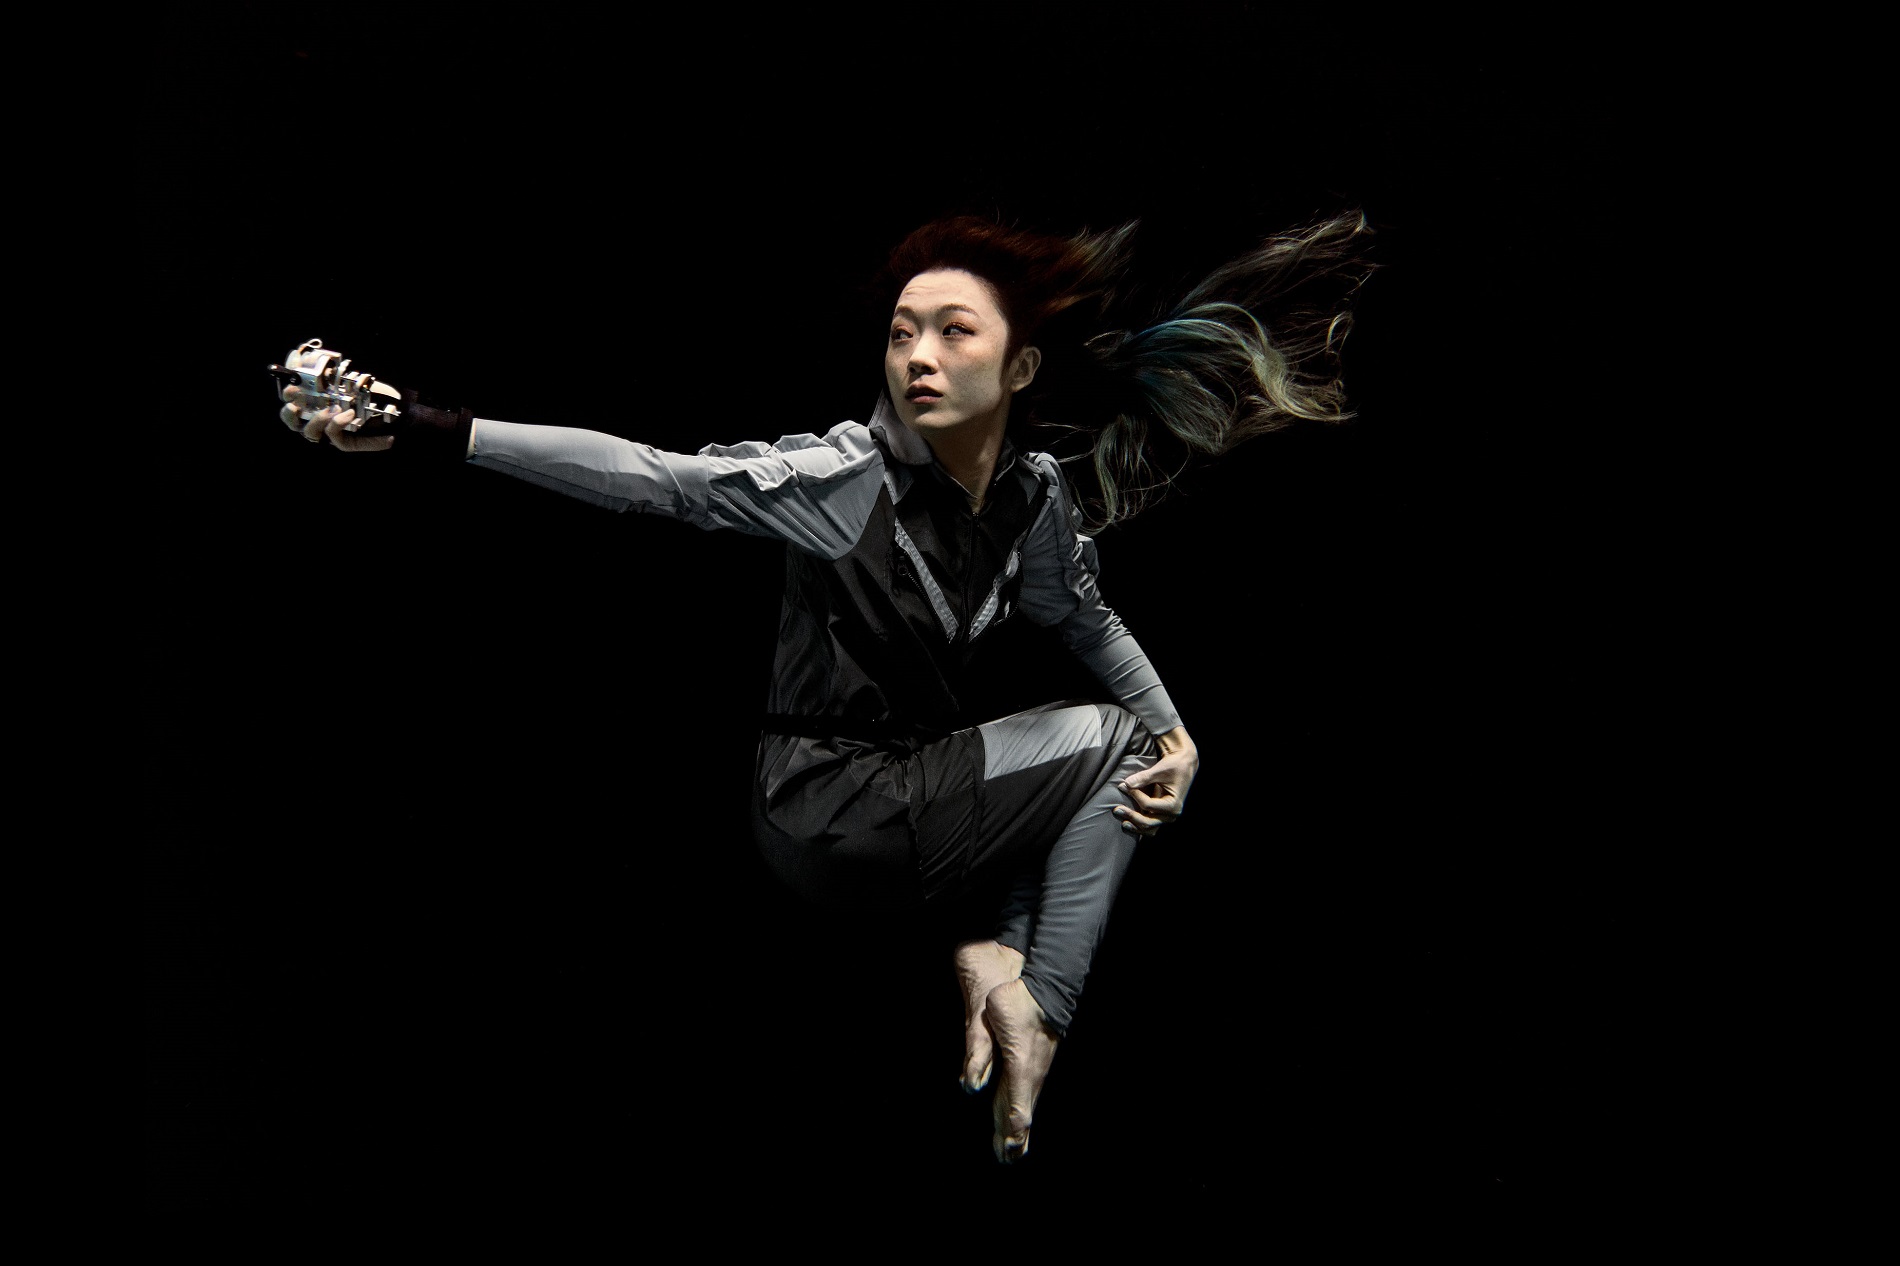 Image of Xin Liu floating in space.